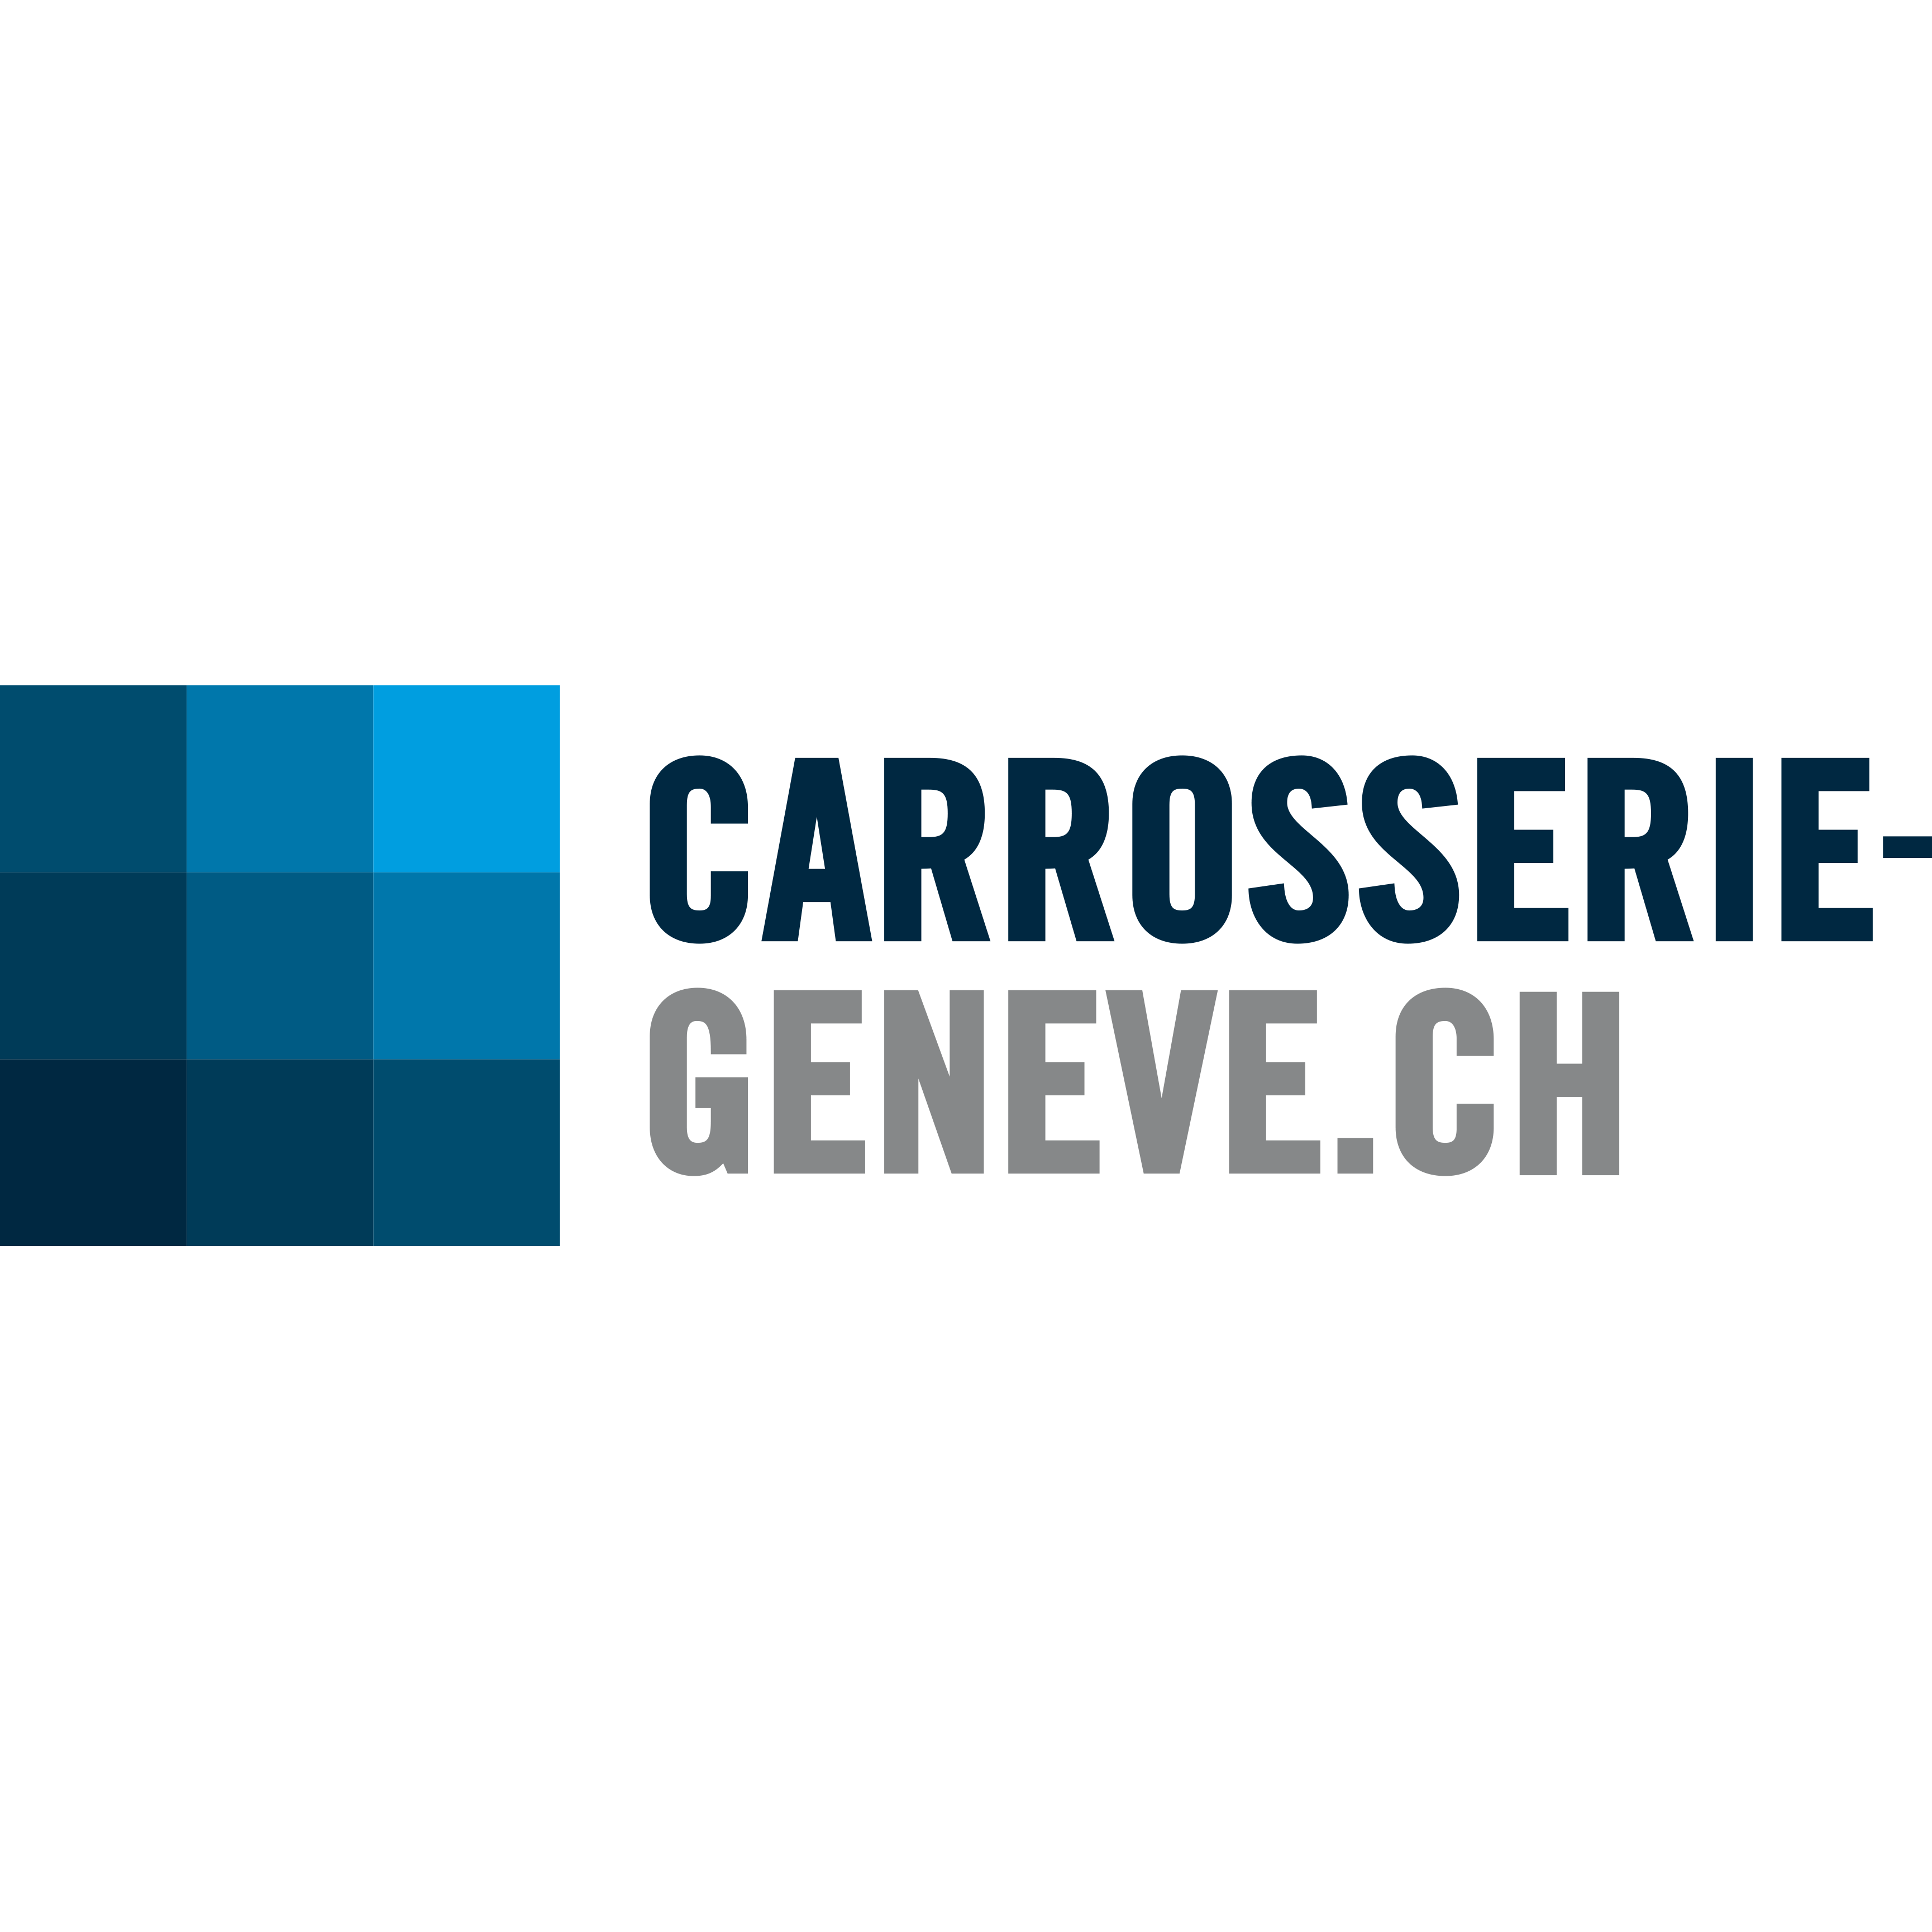 Carrosserie-Geneve.ch Logo